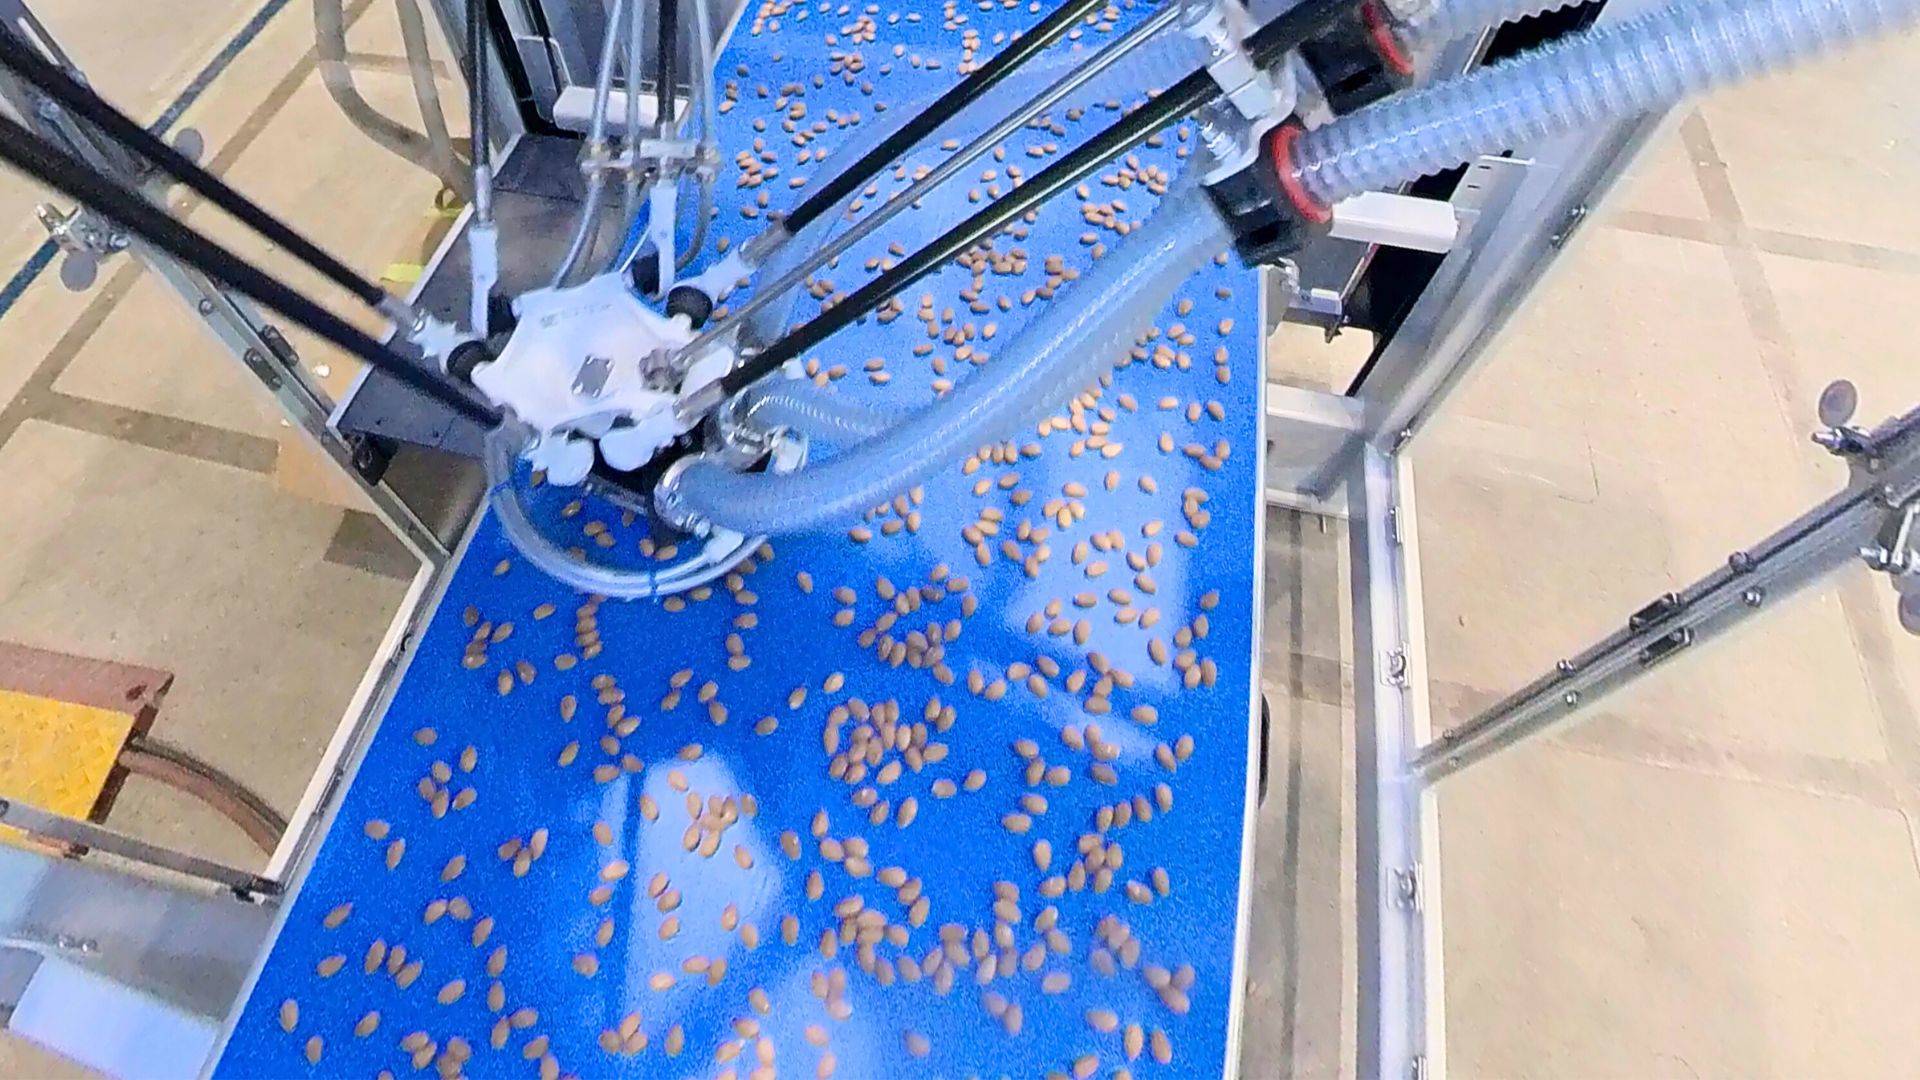 Robotic nut sorter picking almonds